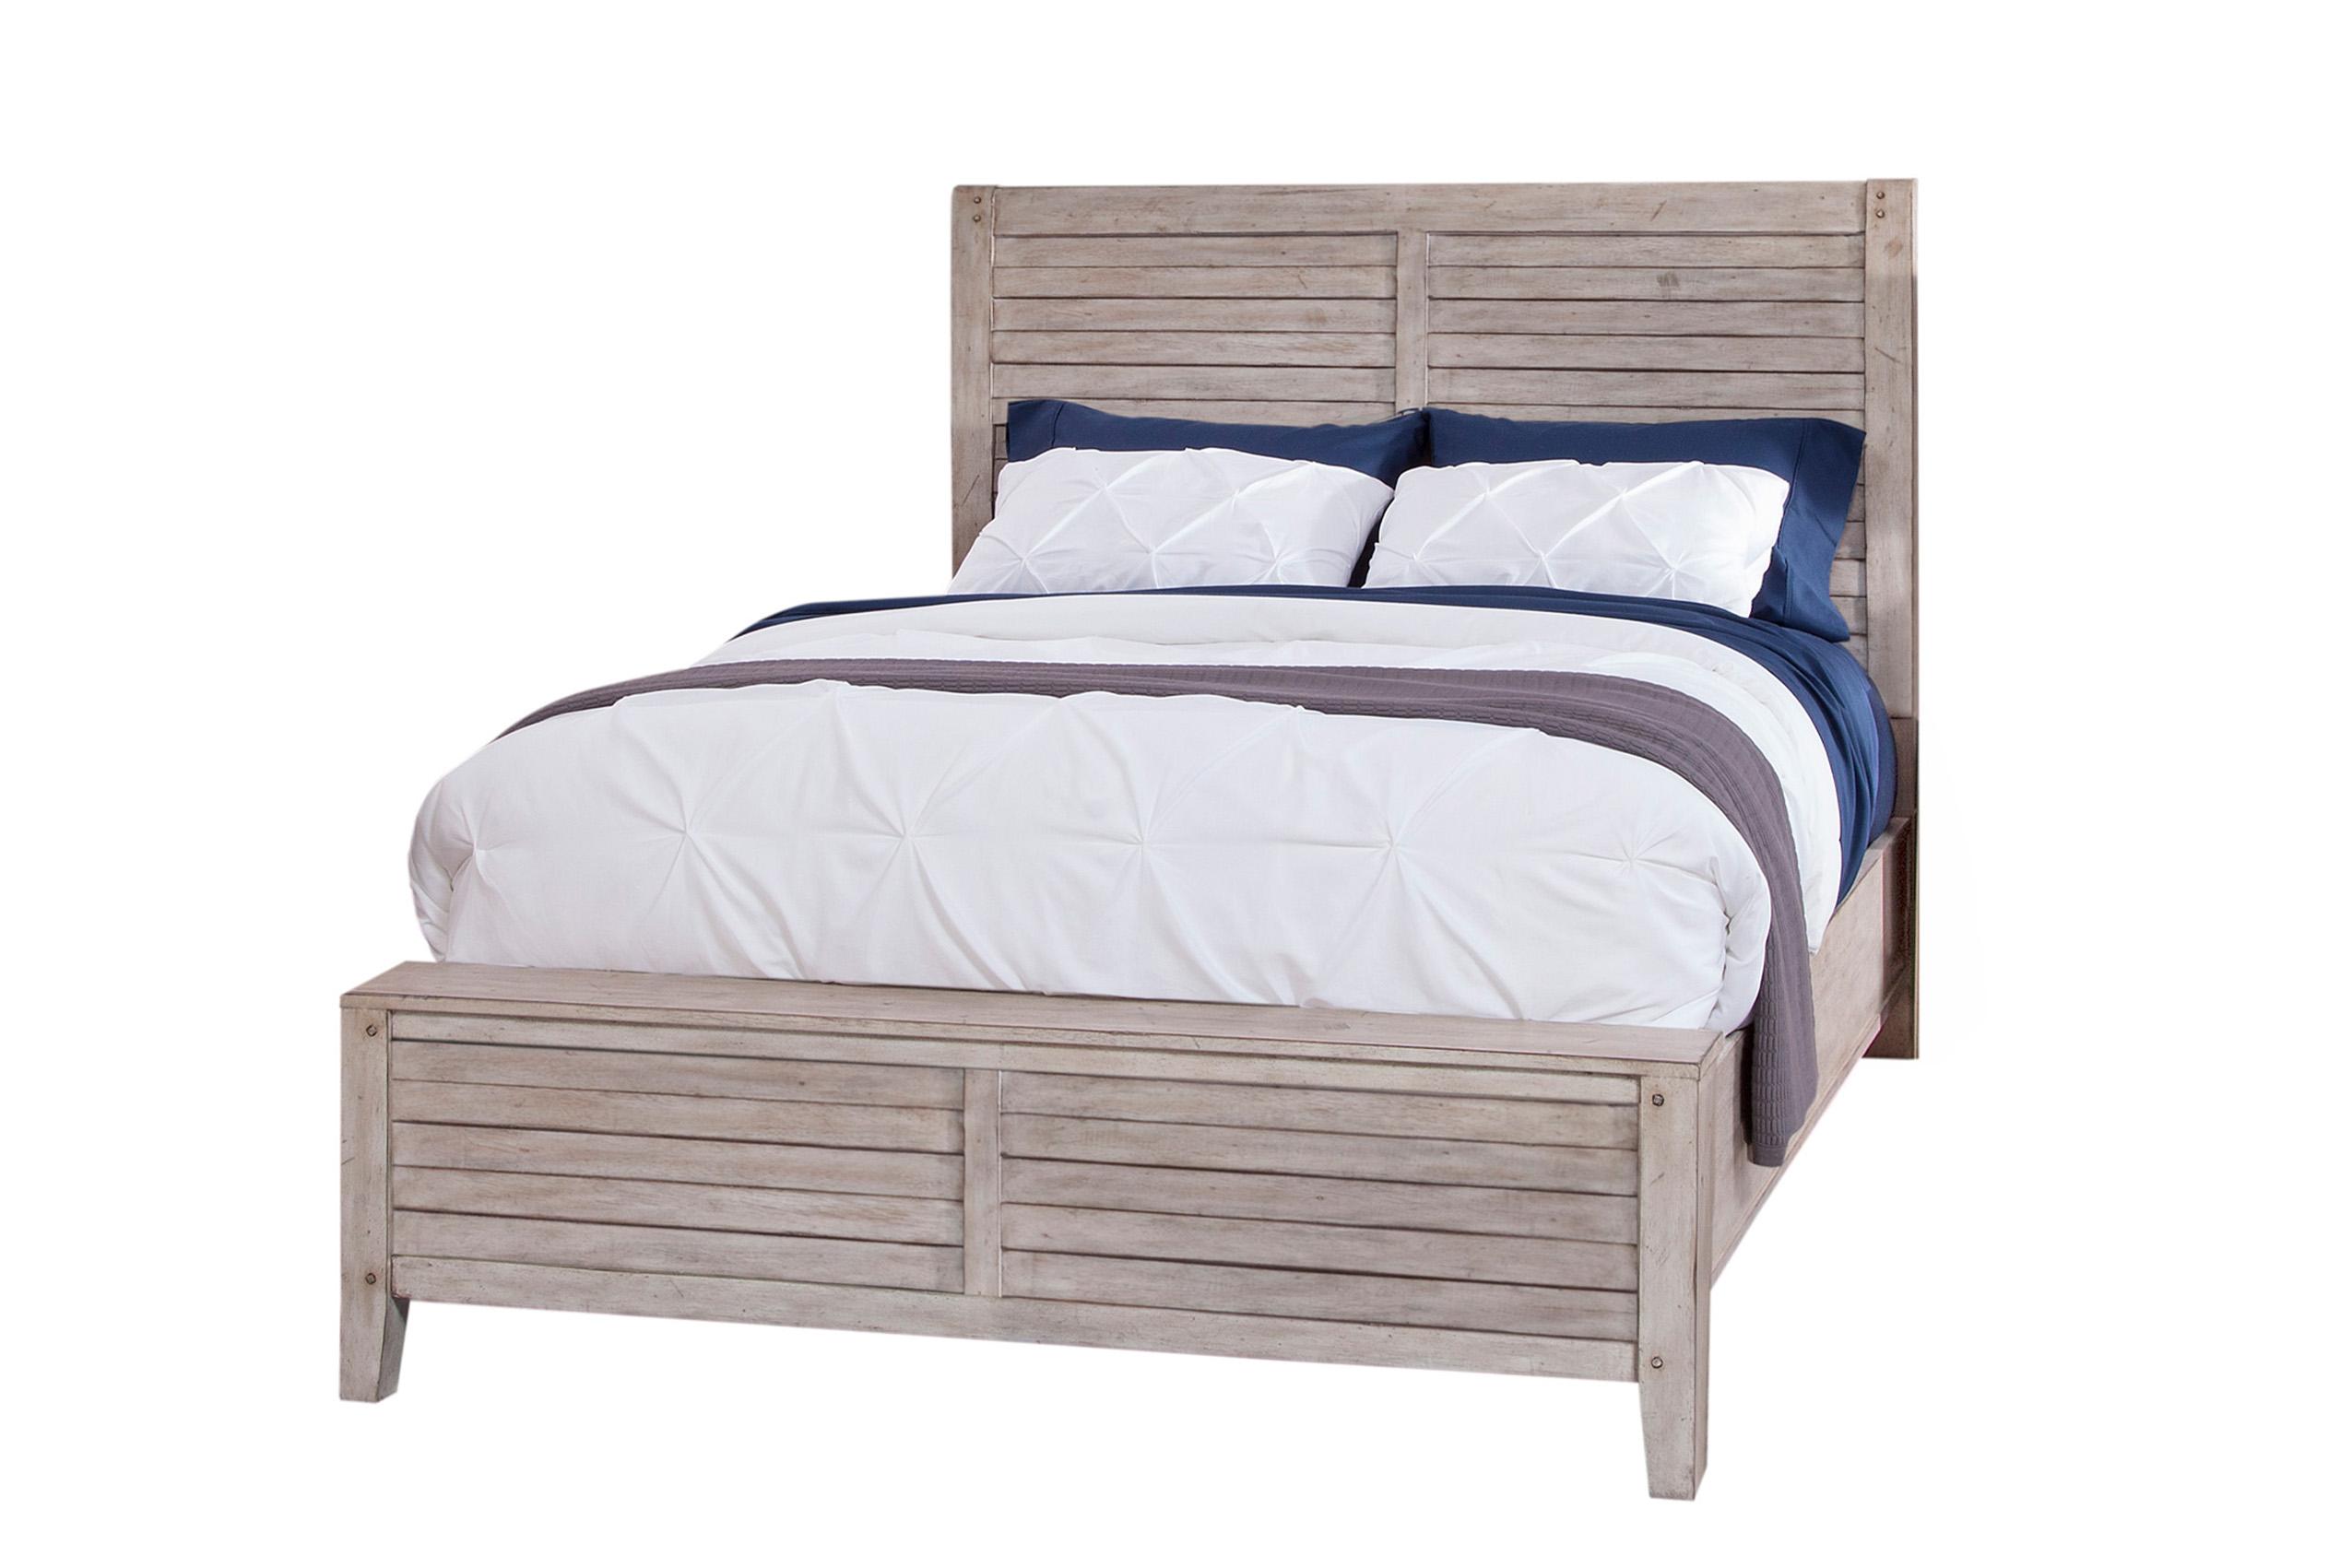 Classic, Traditional Panel Bed AURORA 2810-50PAN 2810-50PNPN in whitewash 